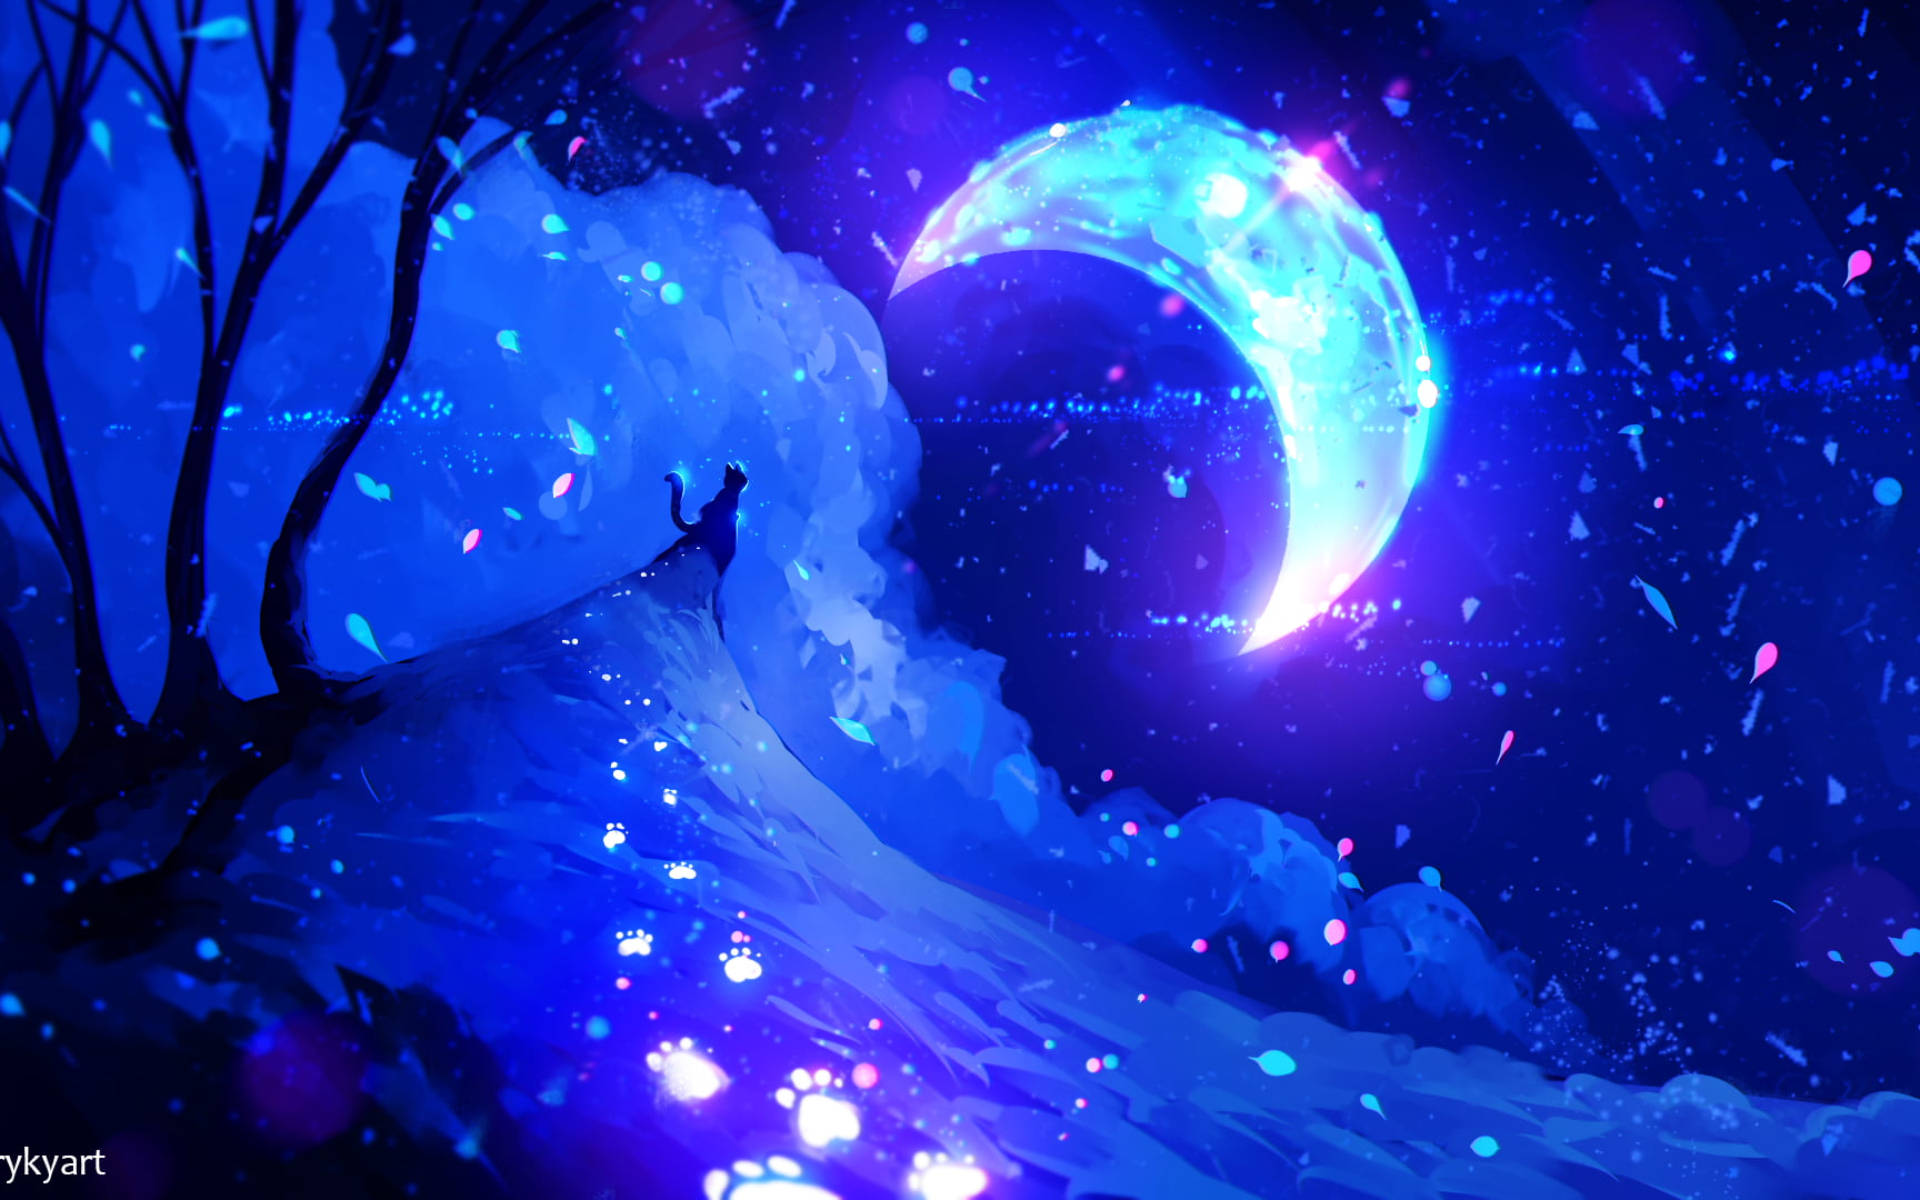 Galaxy Moon And Cat Fantasy Artwork